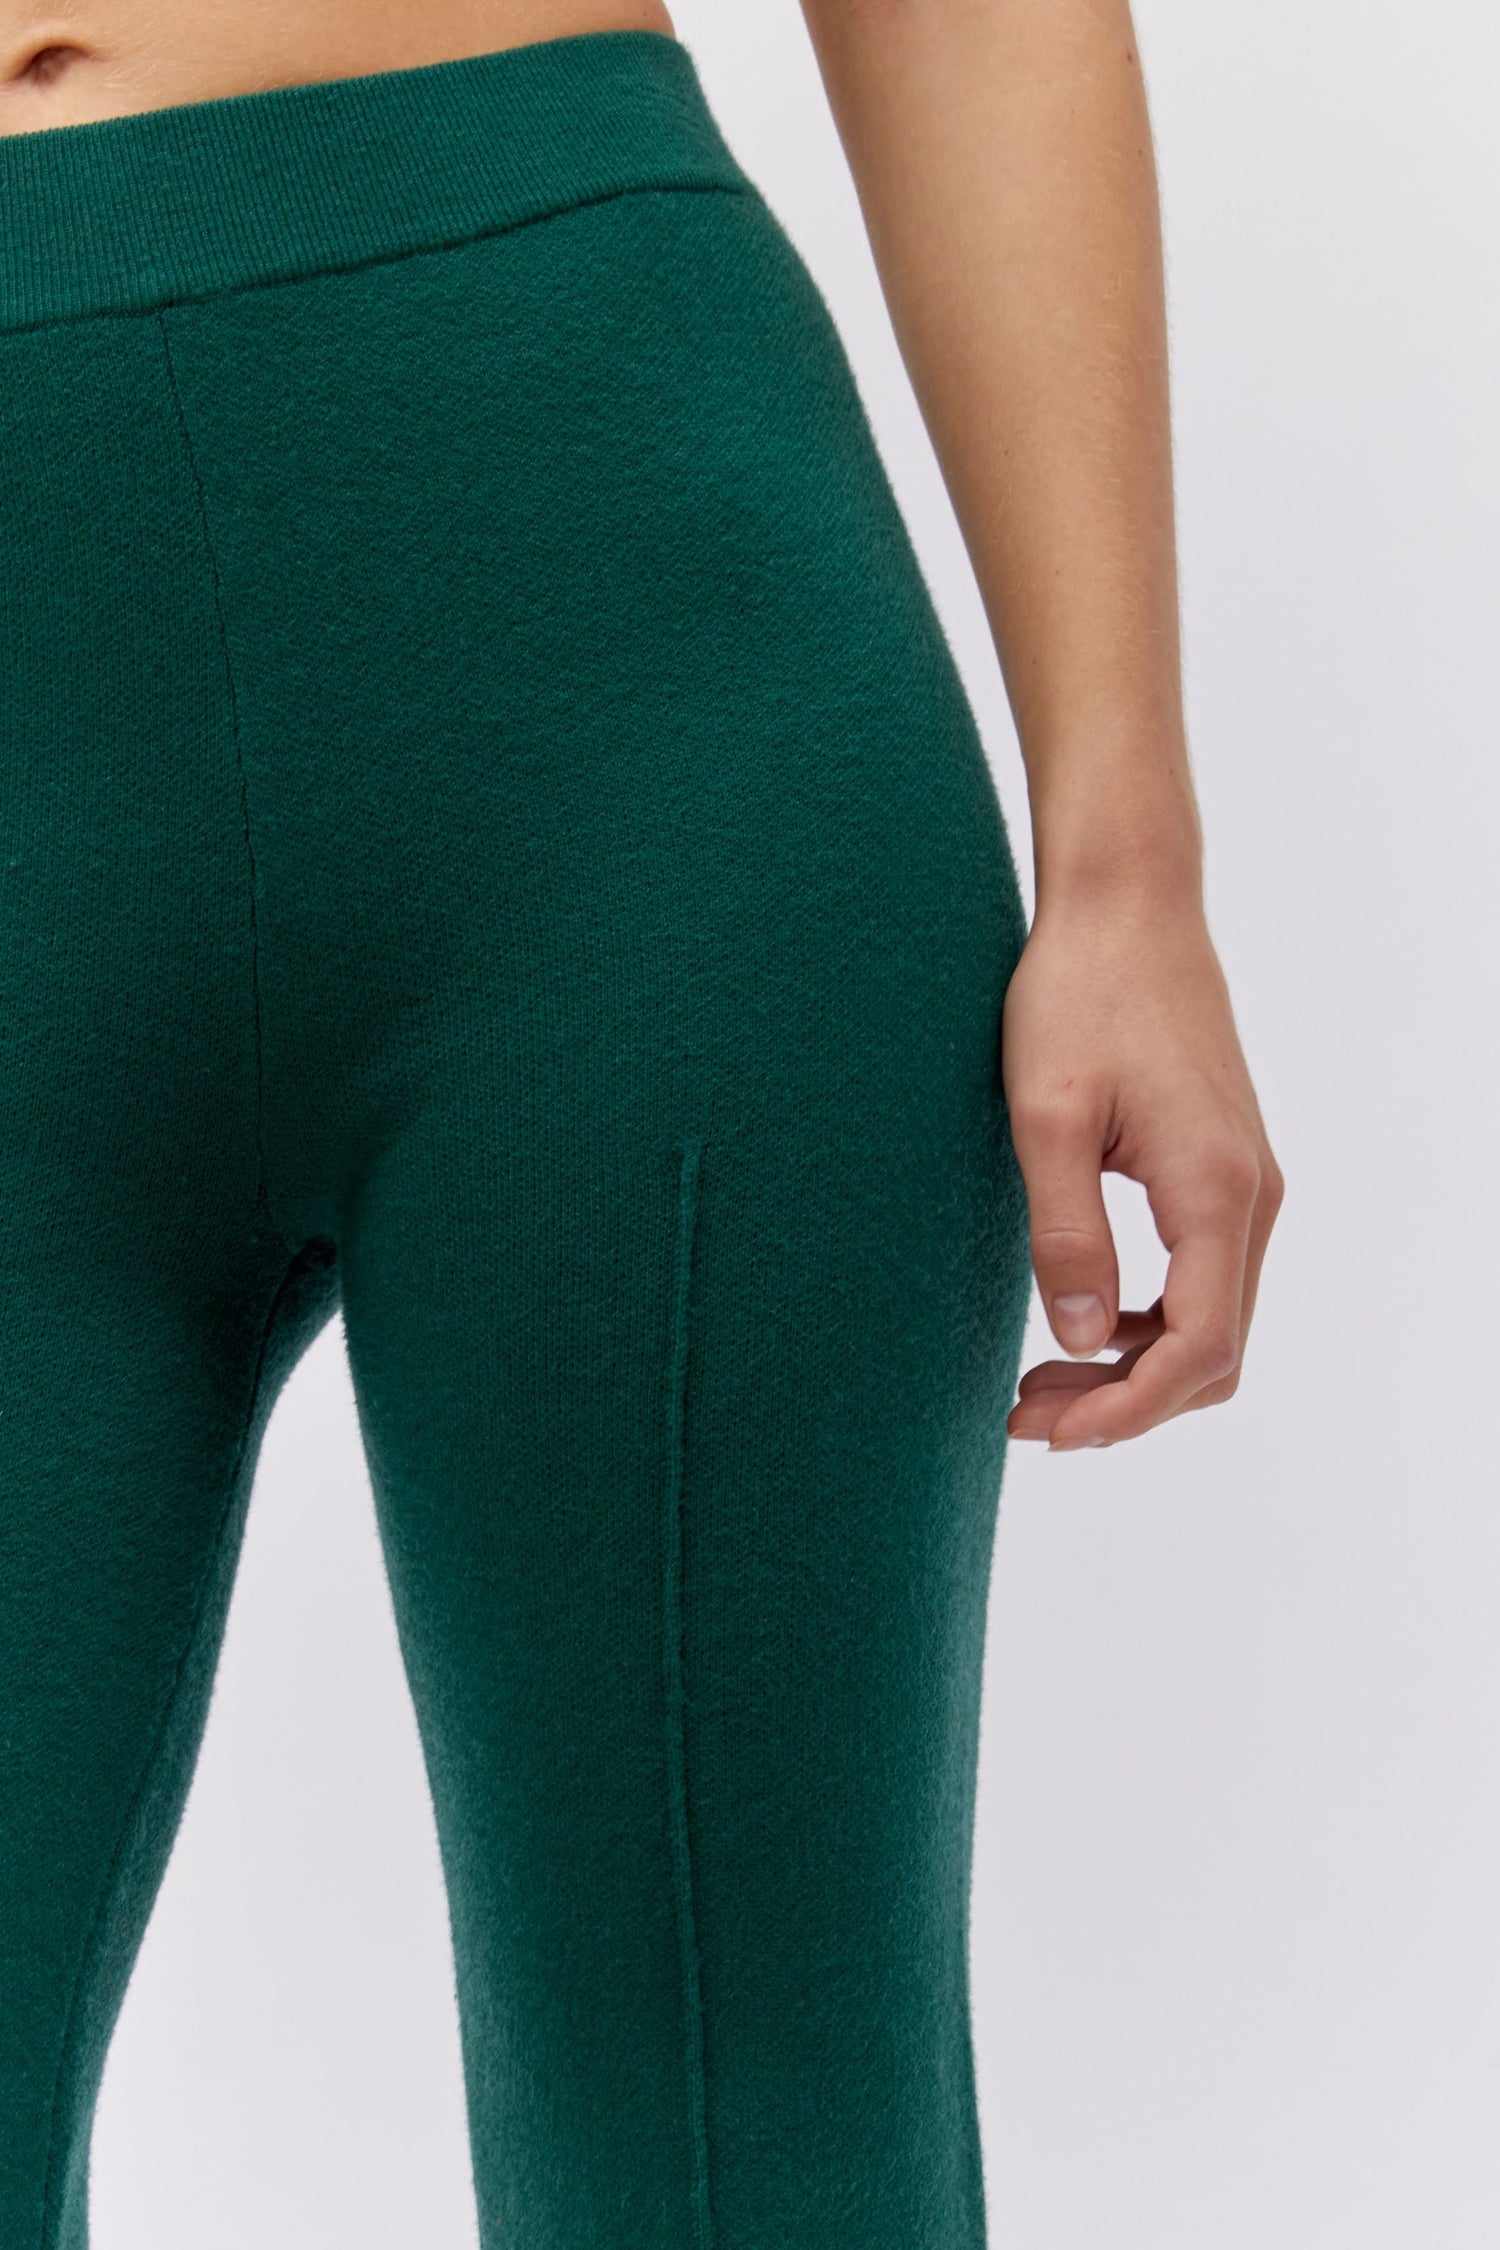 Model wearing a knit pintuck pant in hunter green.